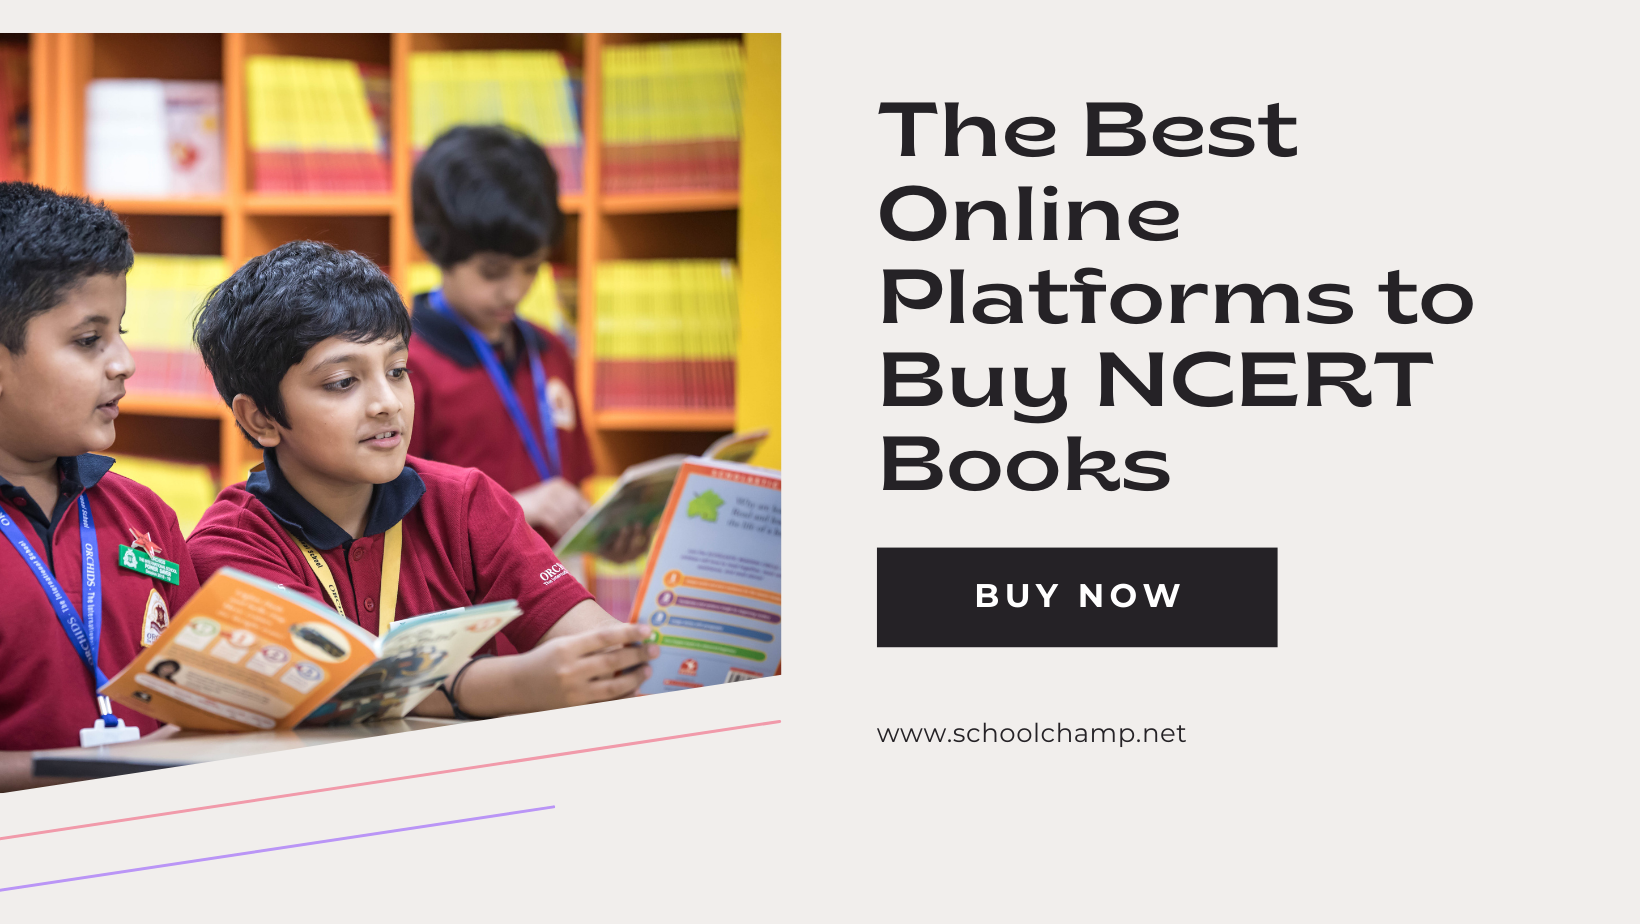 The Best Online Platforms to Buy NCERT Books